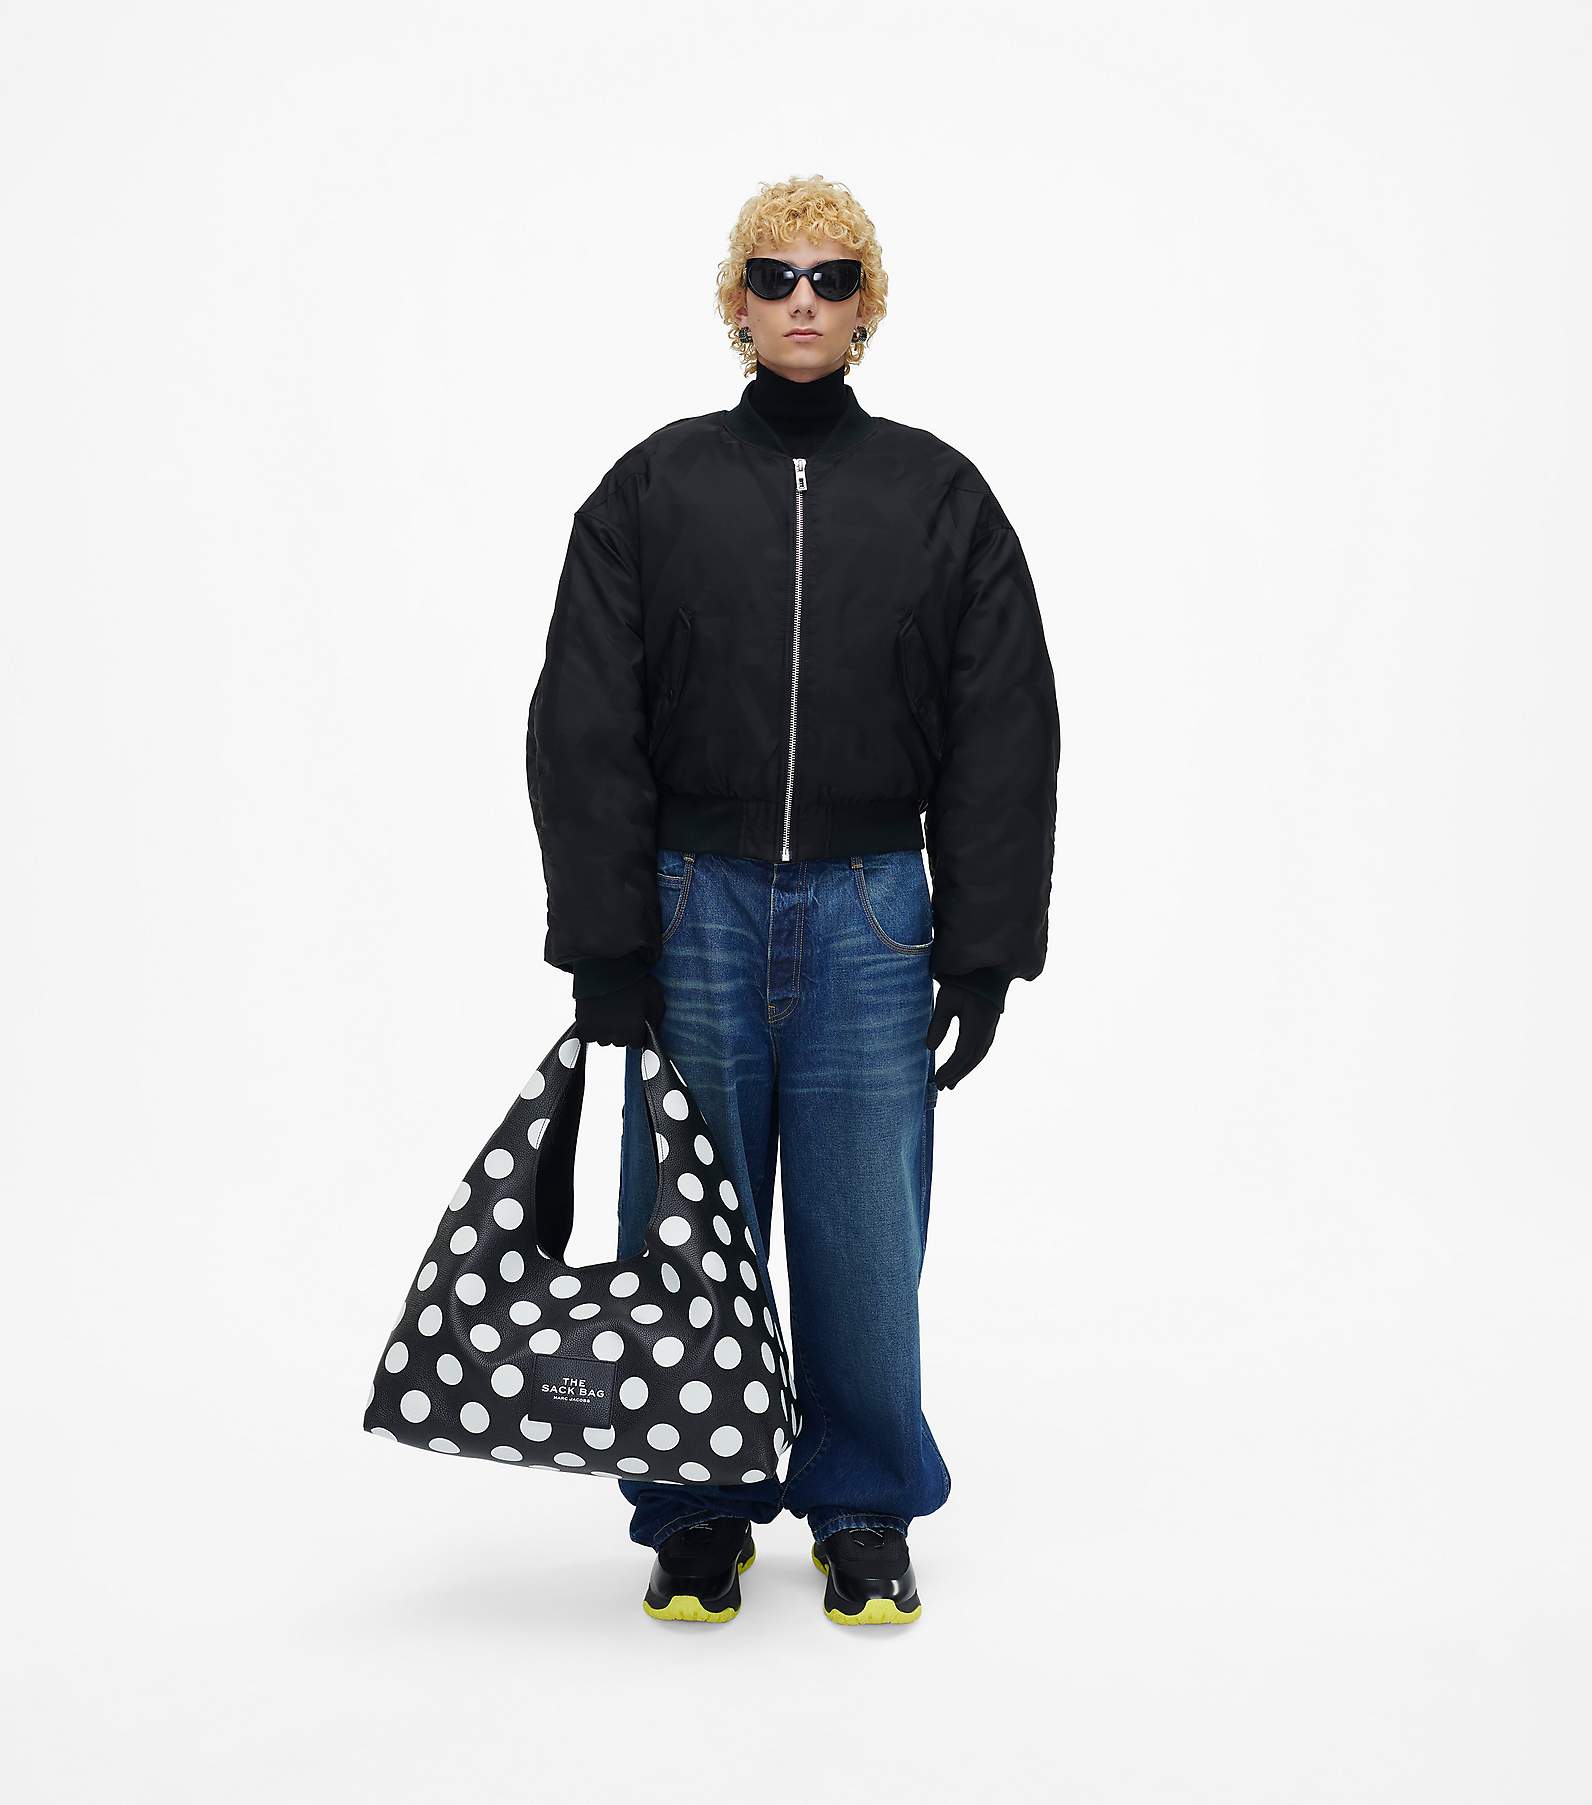 Marc Jacobs The XL Sack Bag